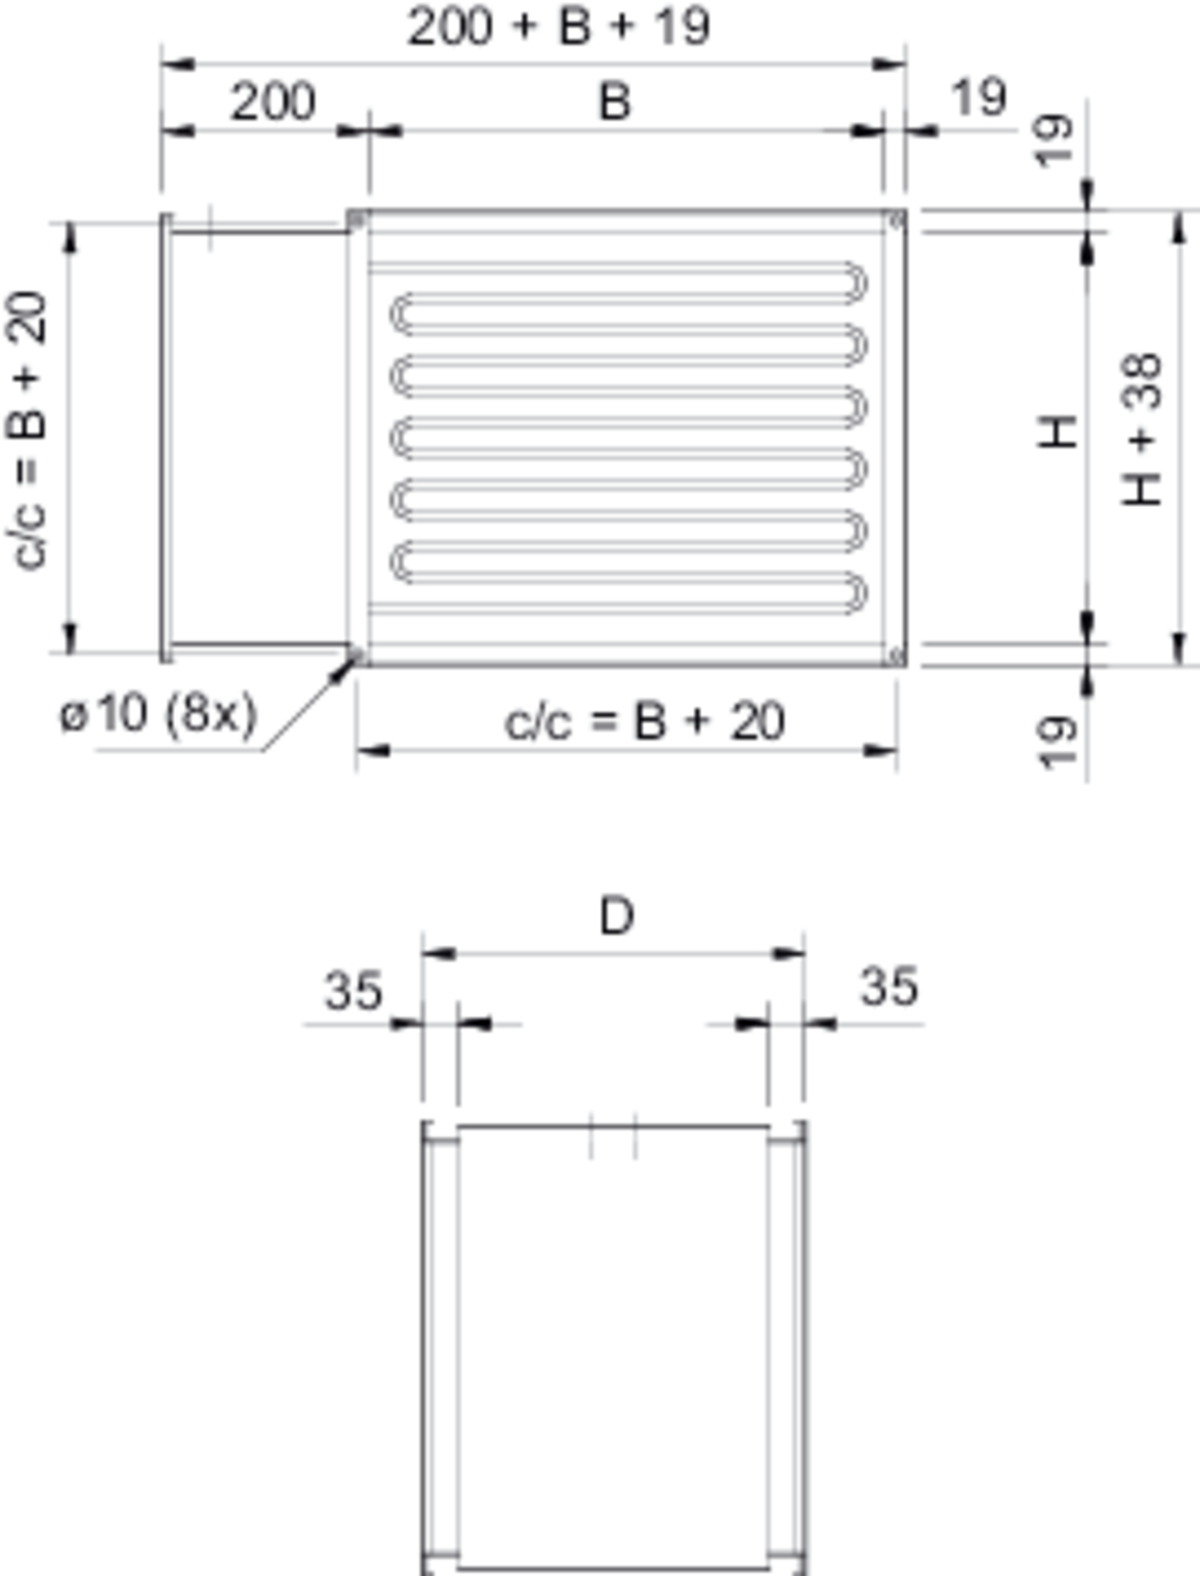 Images Dimensions - RBM 60-35/27 400V/3 Bat électr - Systemair